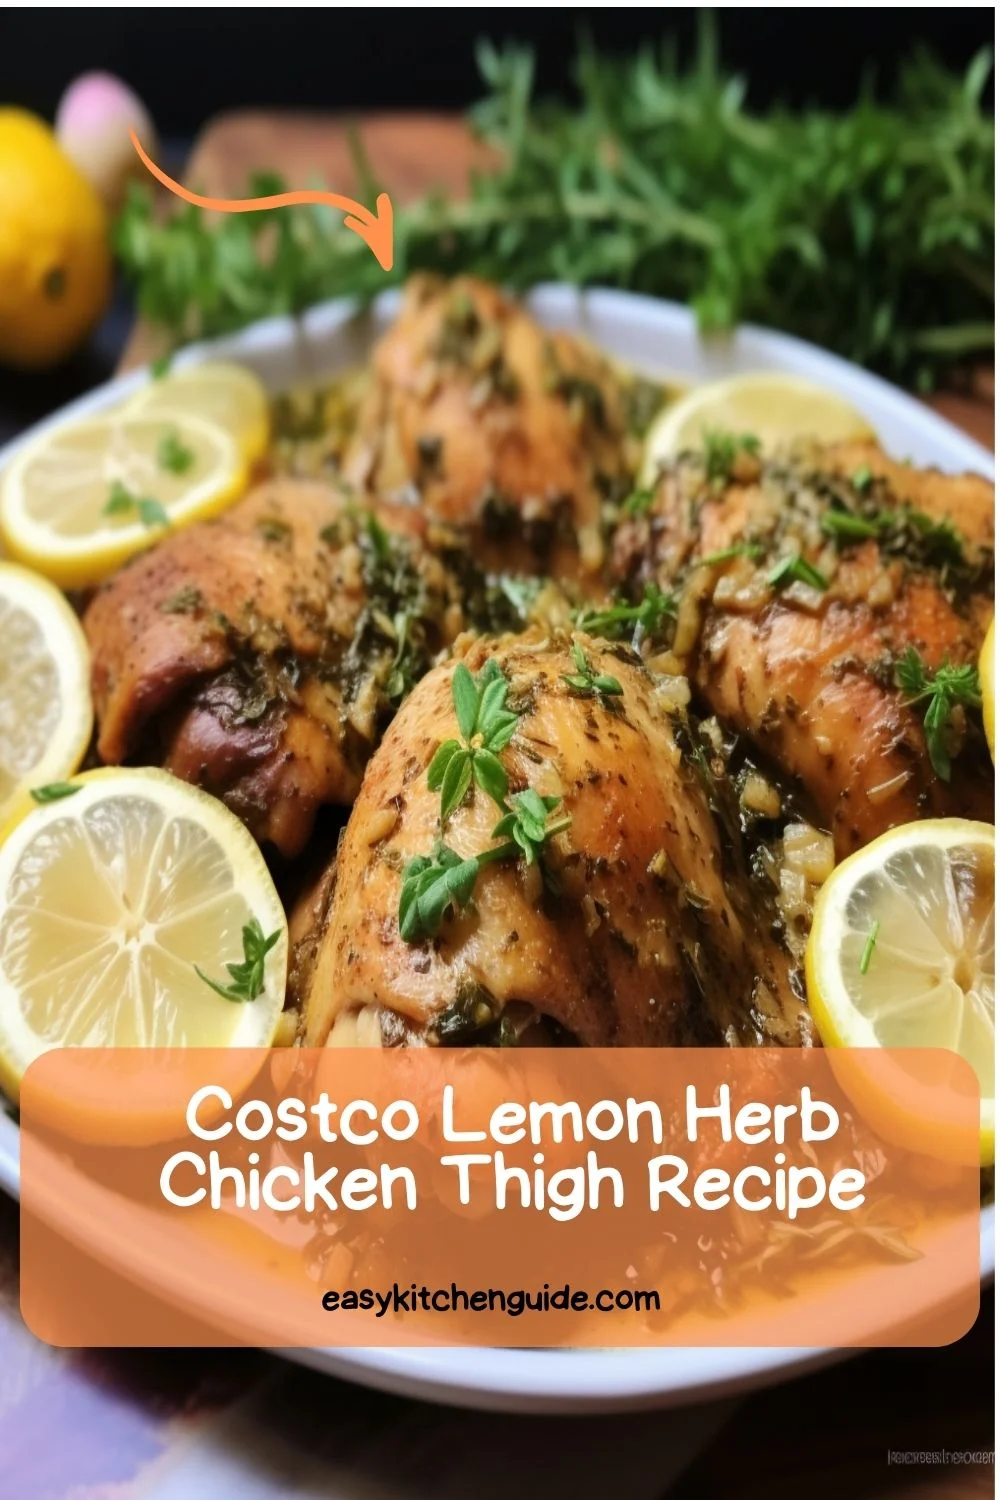 Costco Lemon Herb Chicken Thigh Recipe